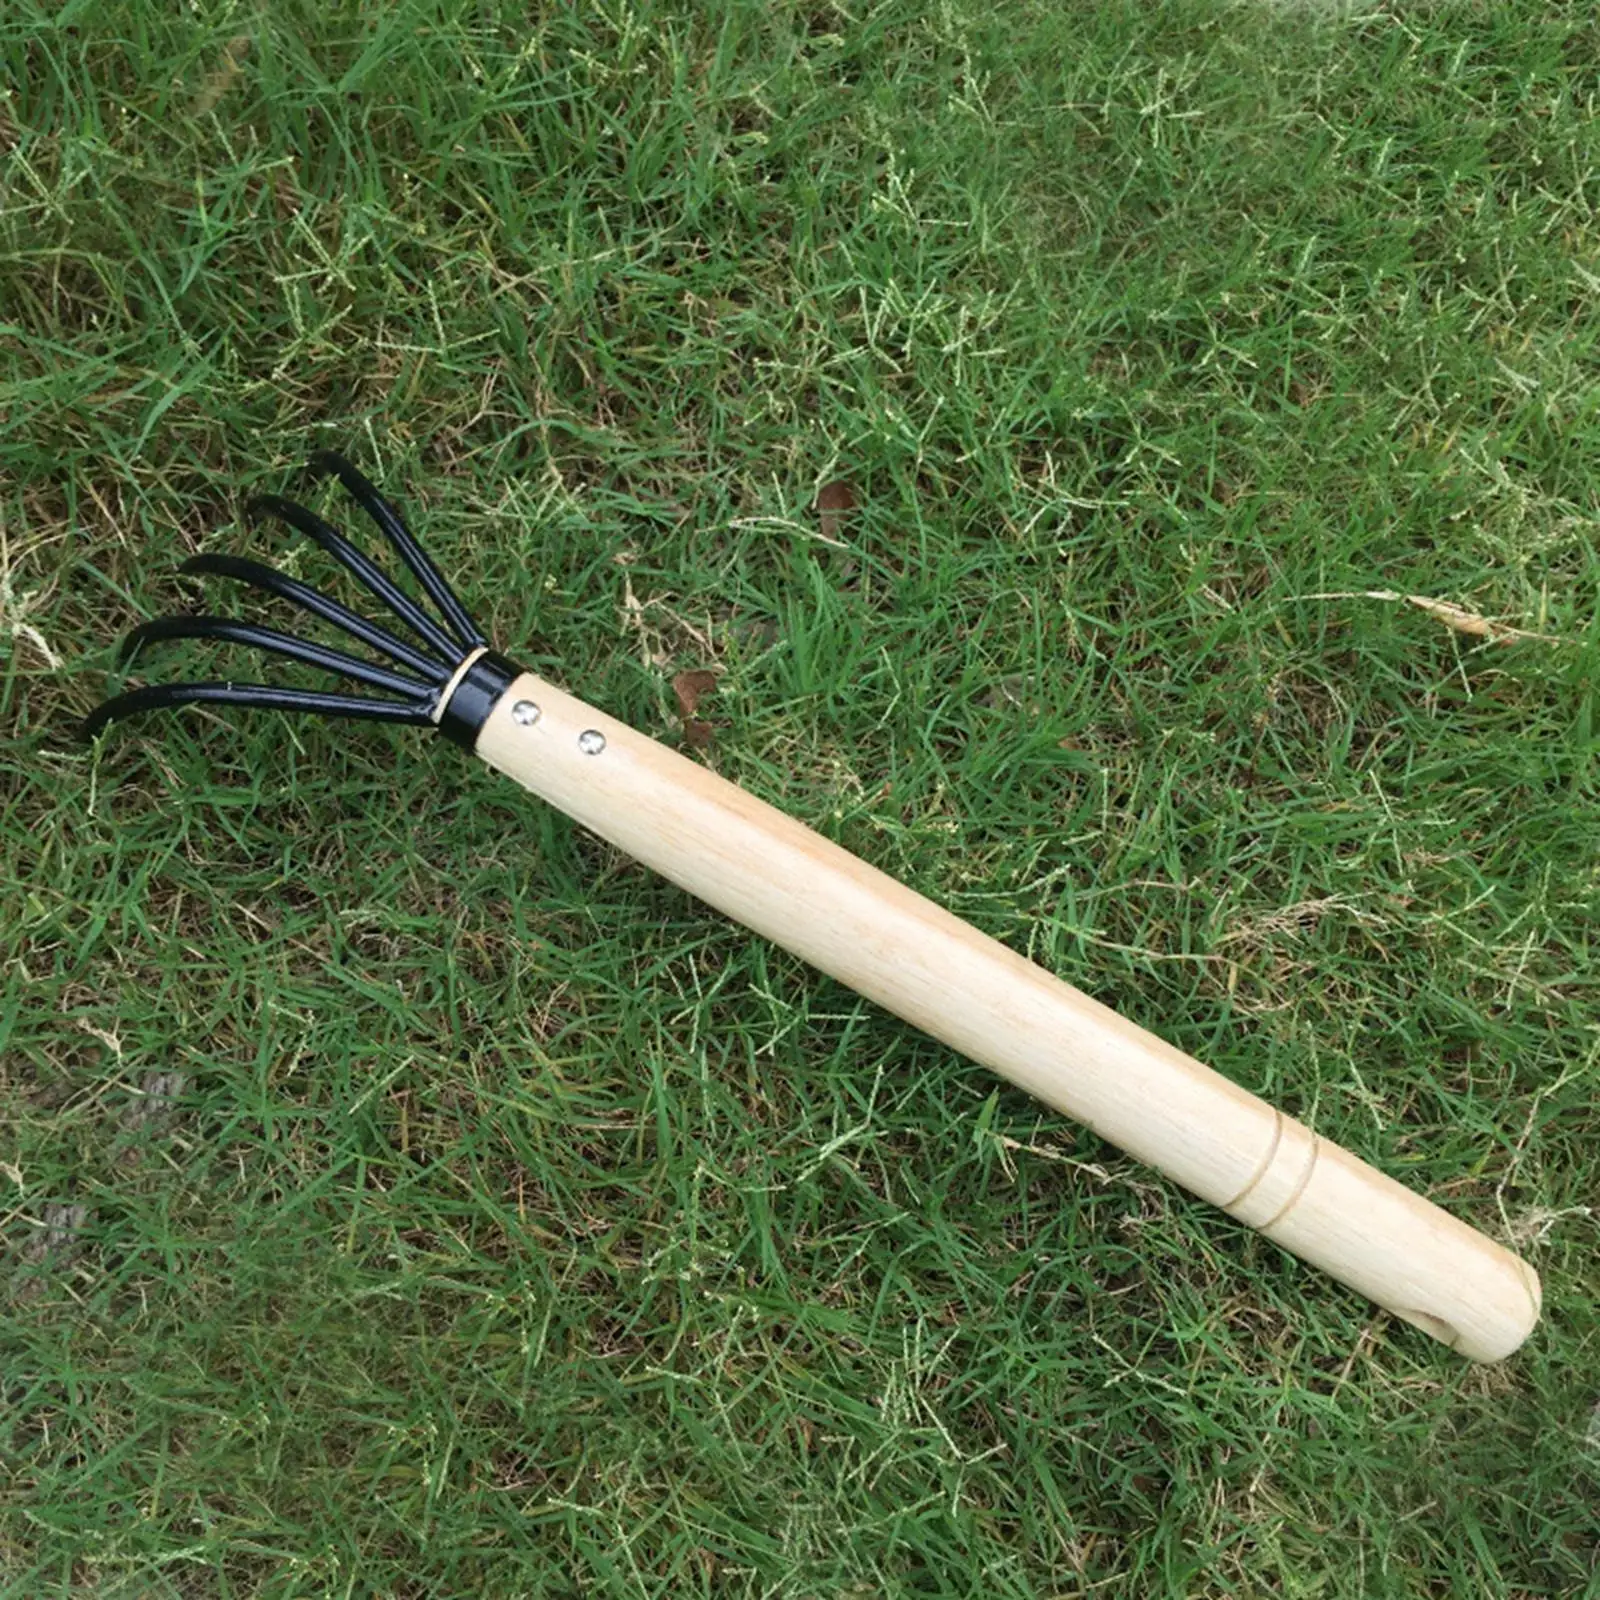 5 Claws Garden Rake Handheld Wooden Handle Garden Gardening Tools Agriculture Lightweight Mutipurpose for Lawns Digging Farm